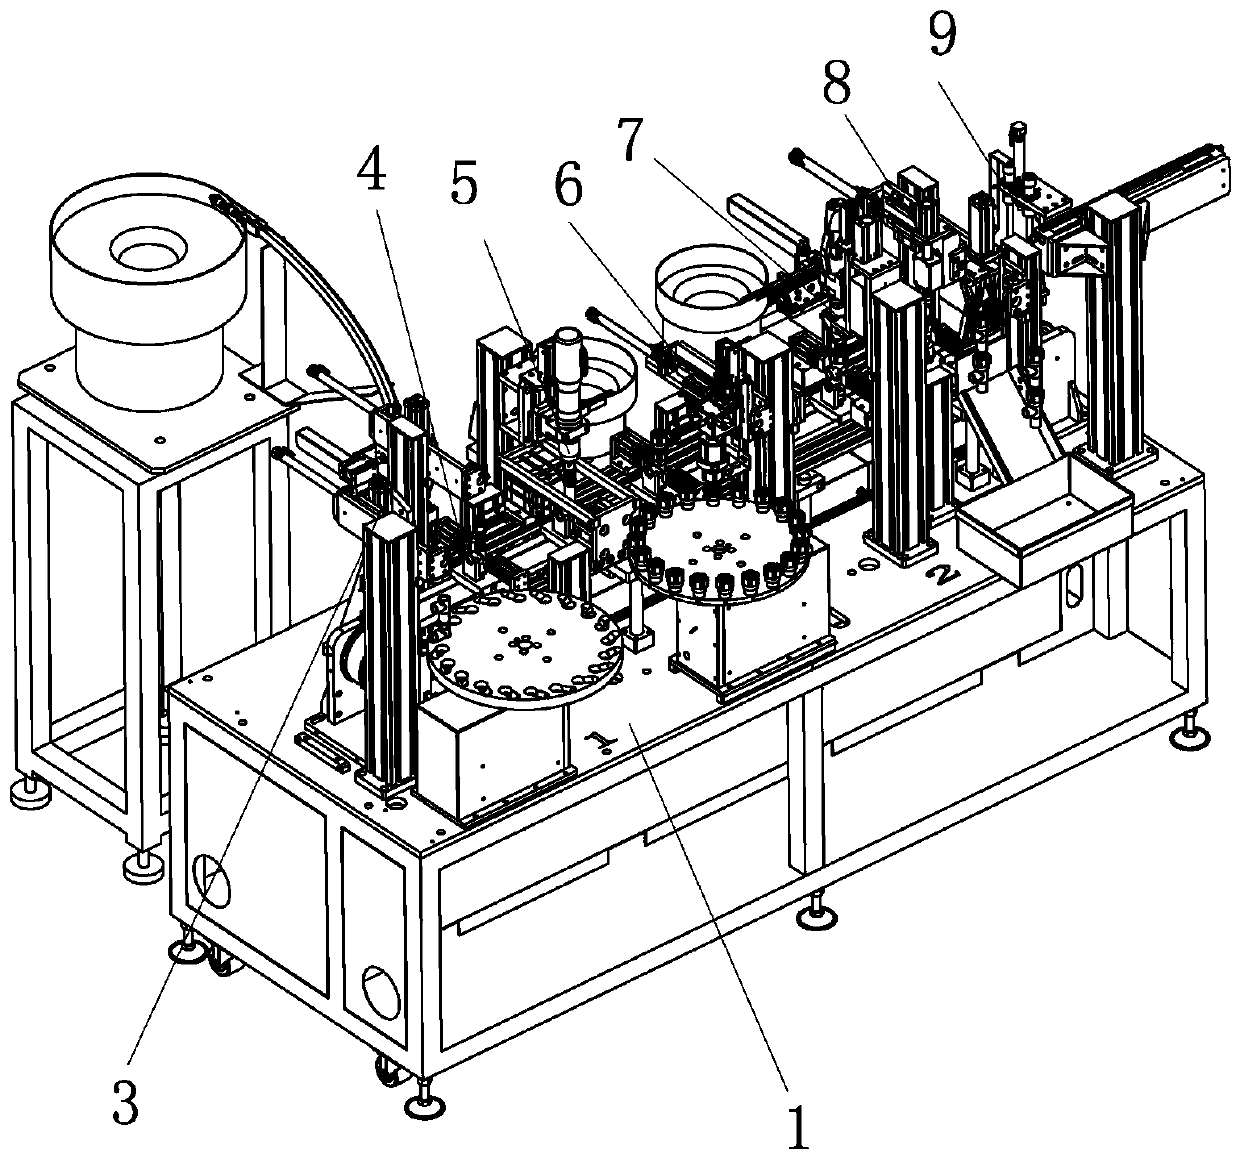 Full automatic angle valve assembly machine